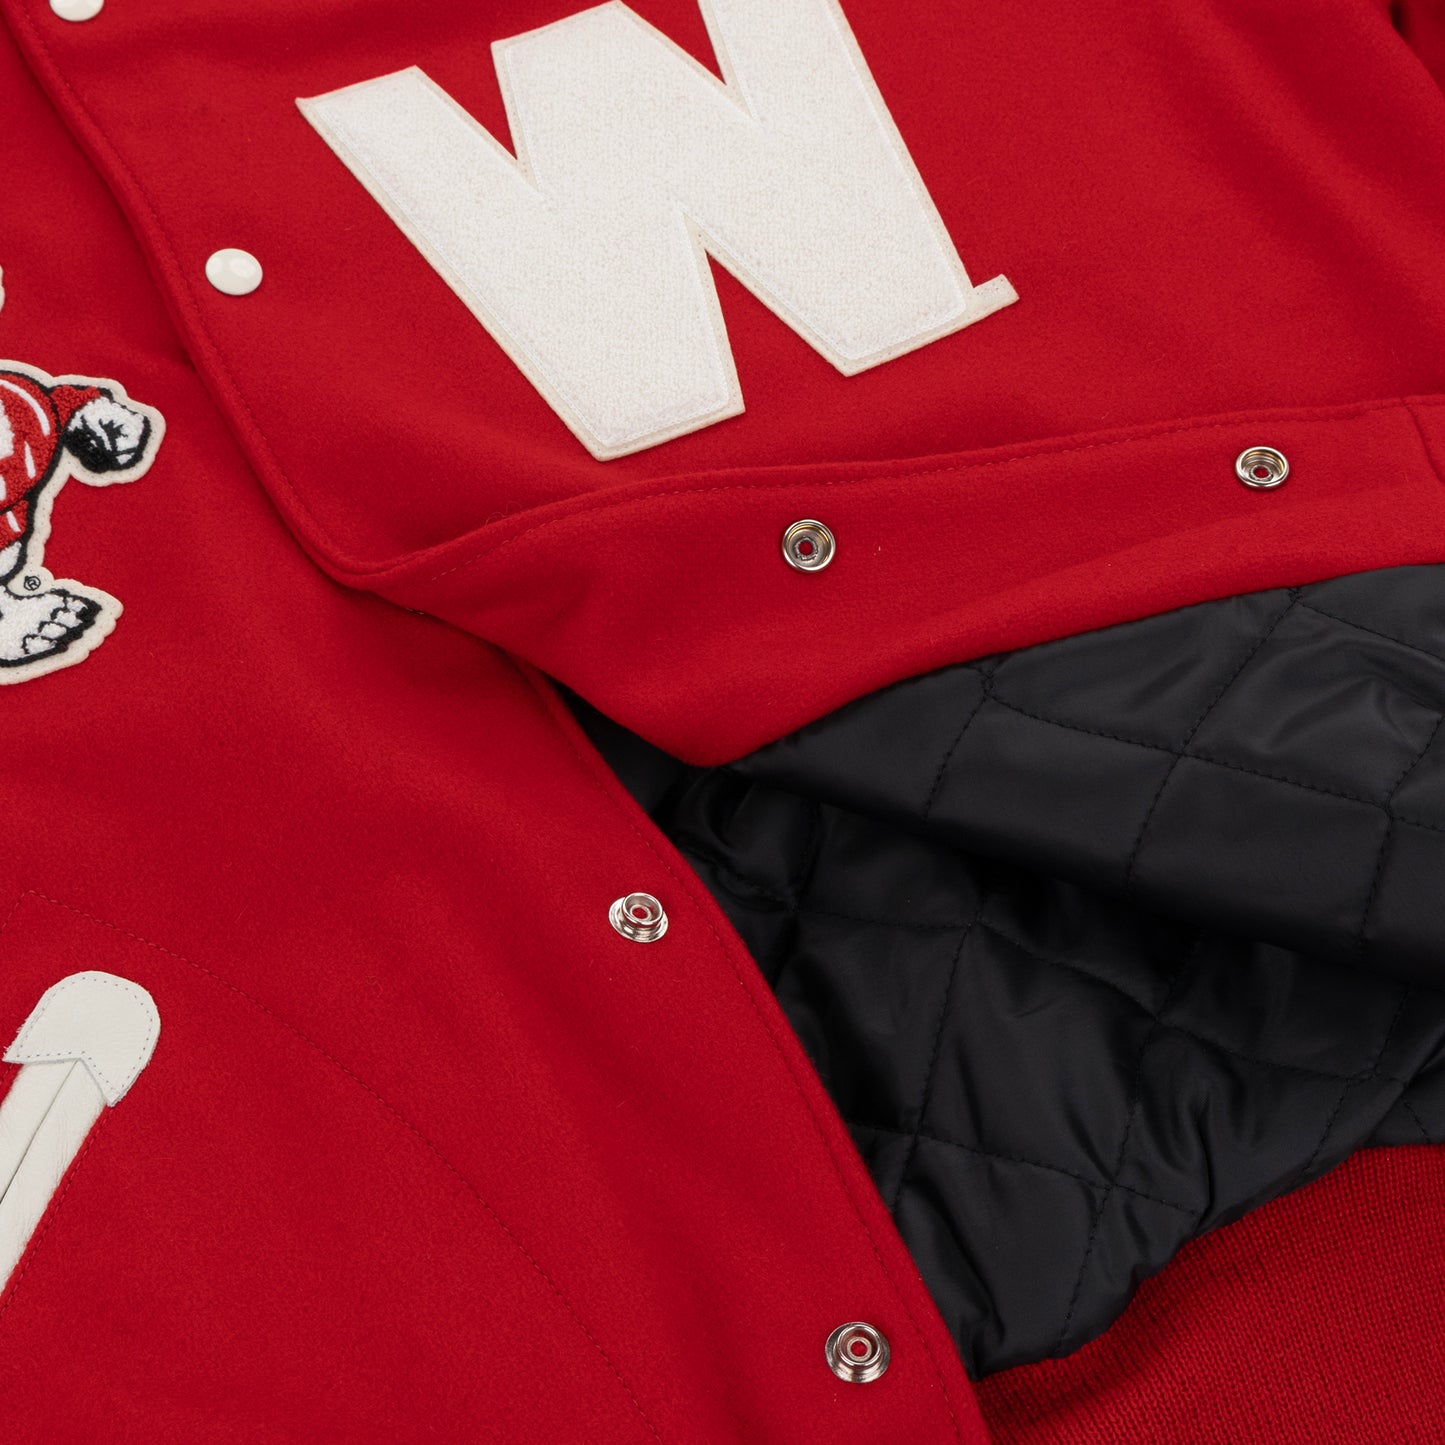 University of Wisconsin 1952 Authentic Jacket